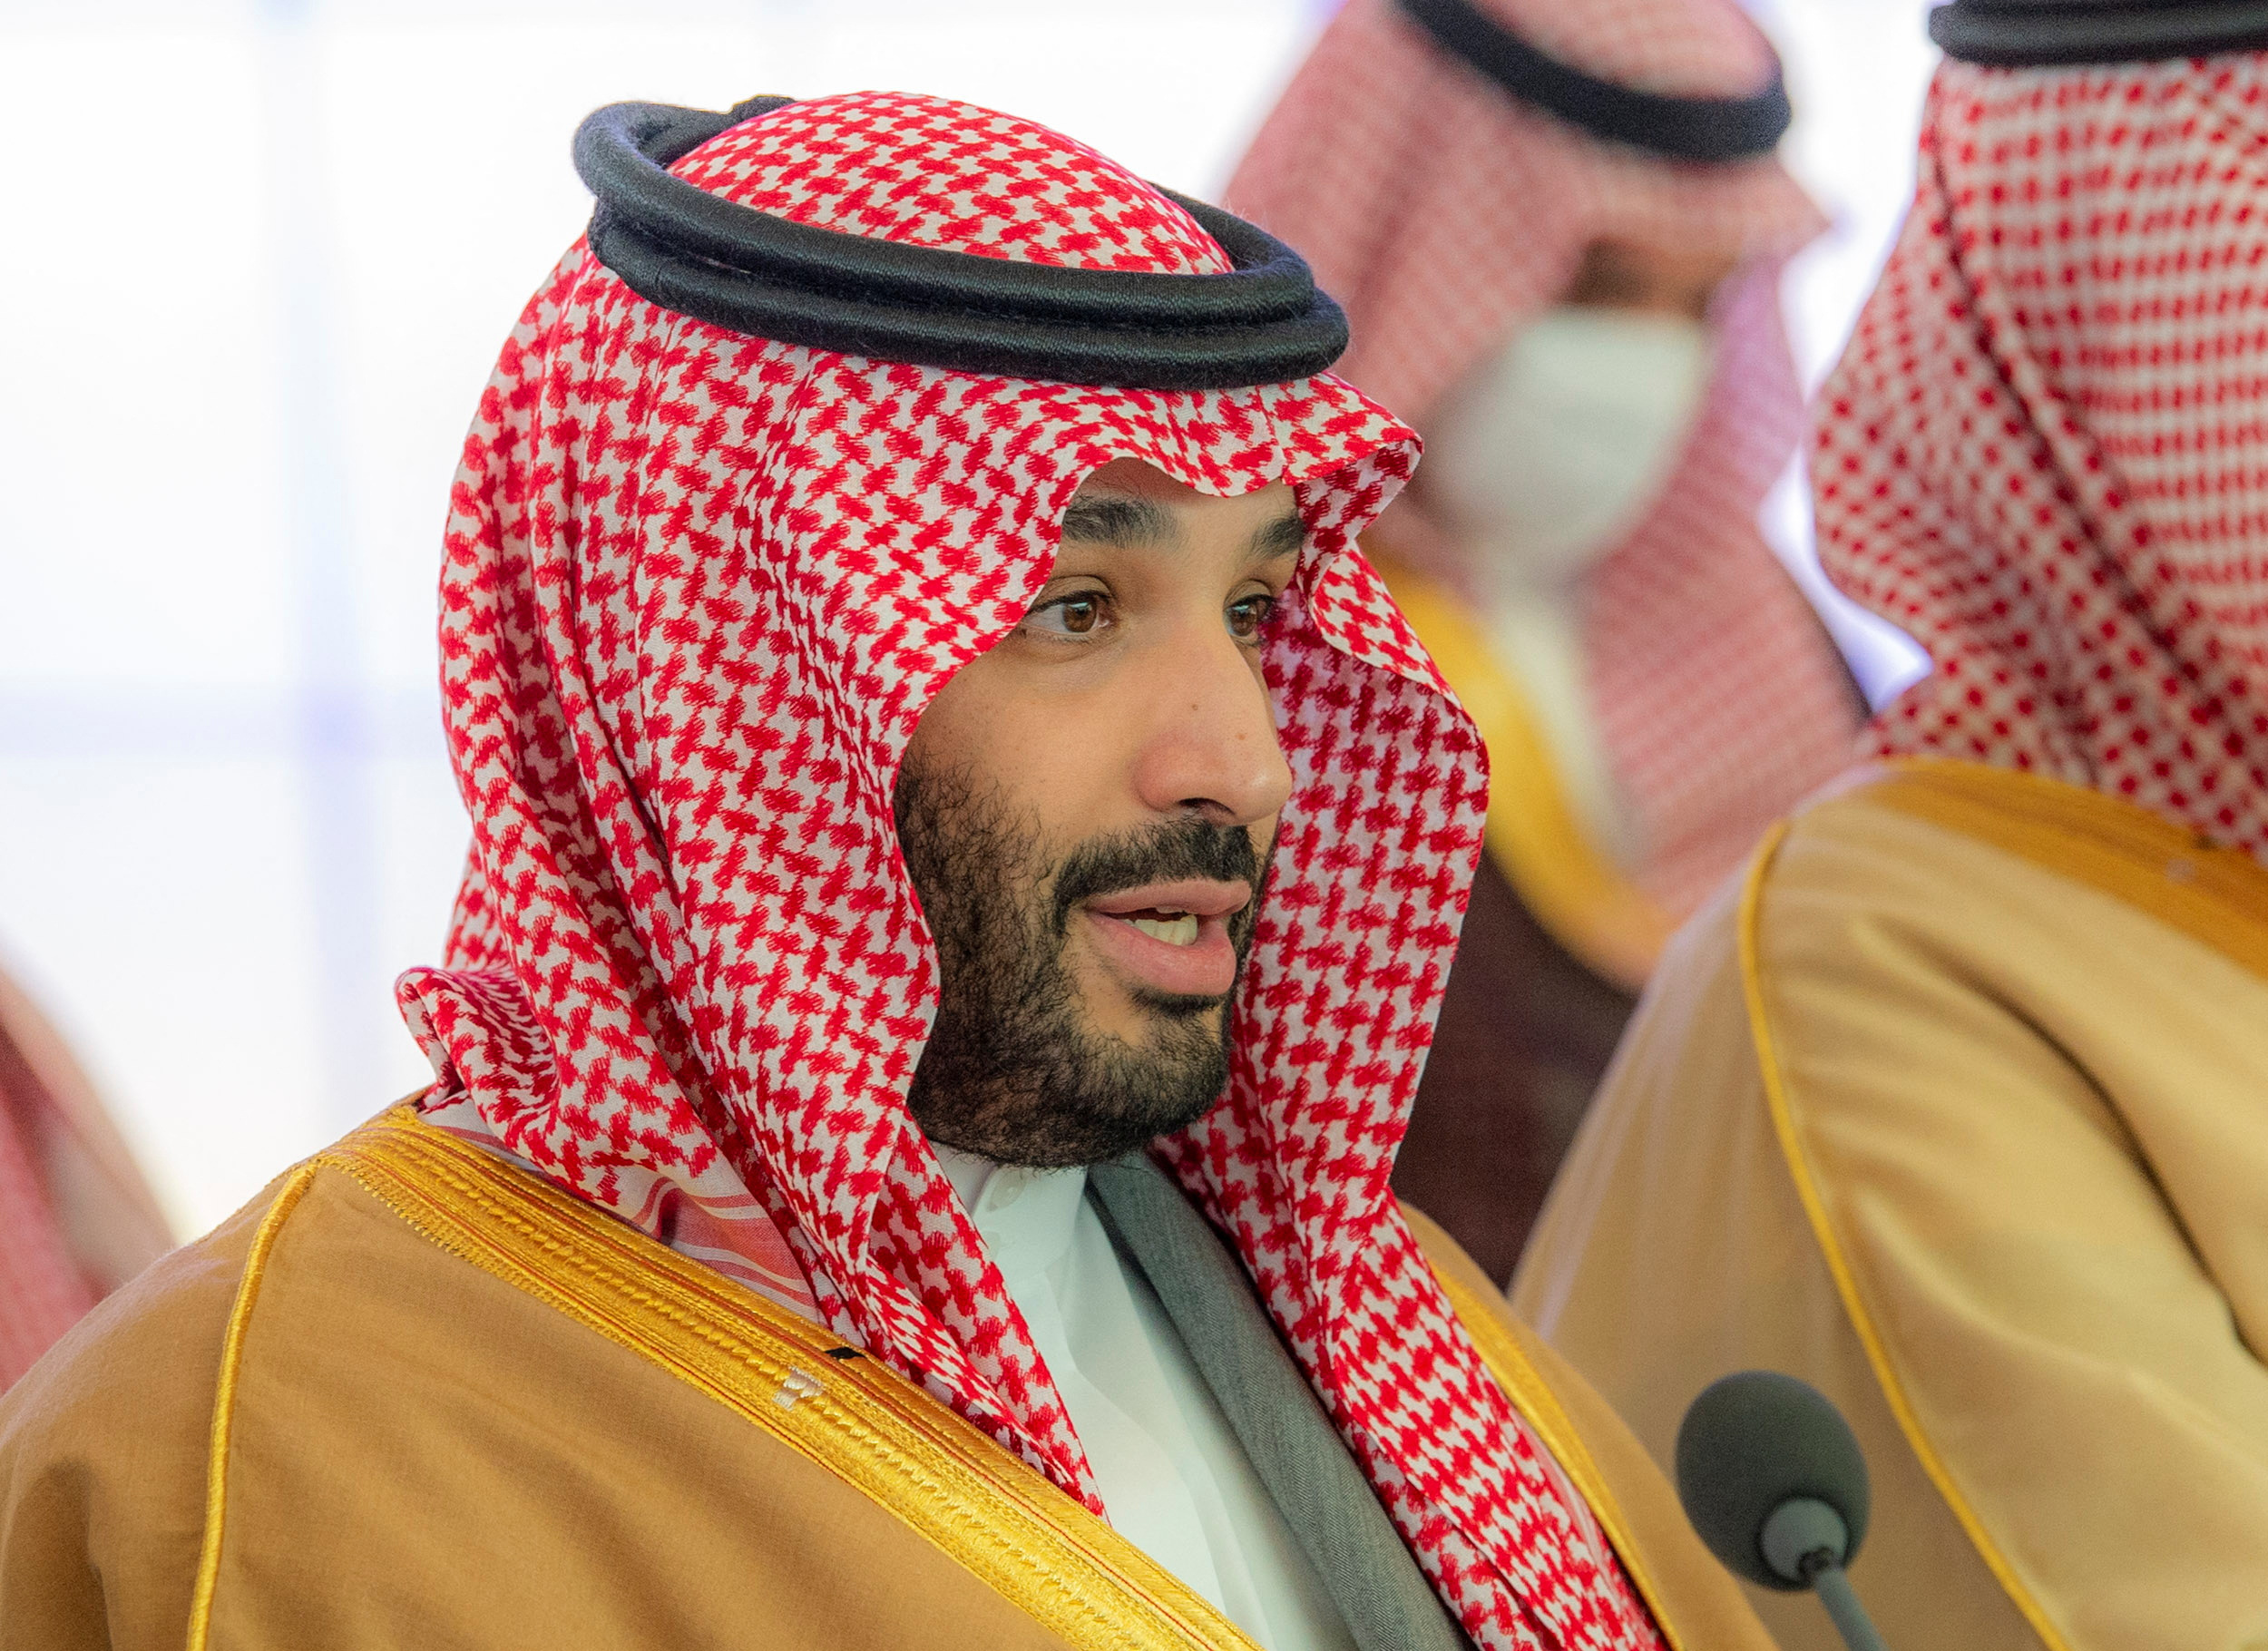 Saudi Arabia Crown Prince Mohammed bin Salman visits South Korea